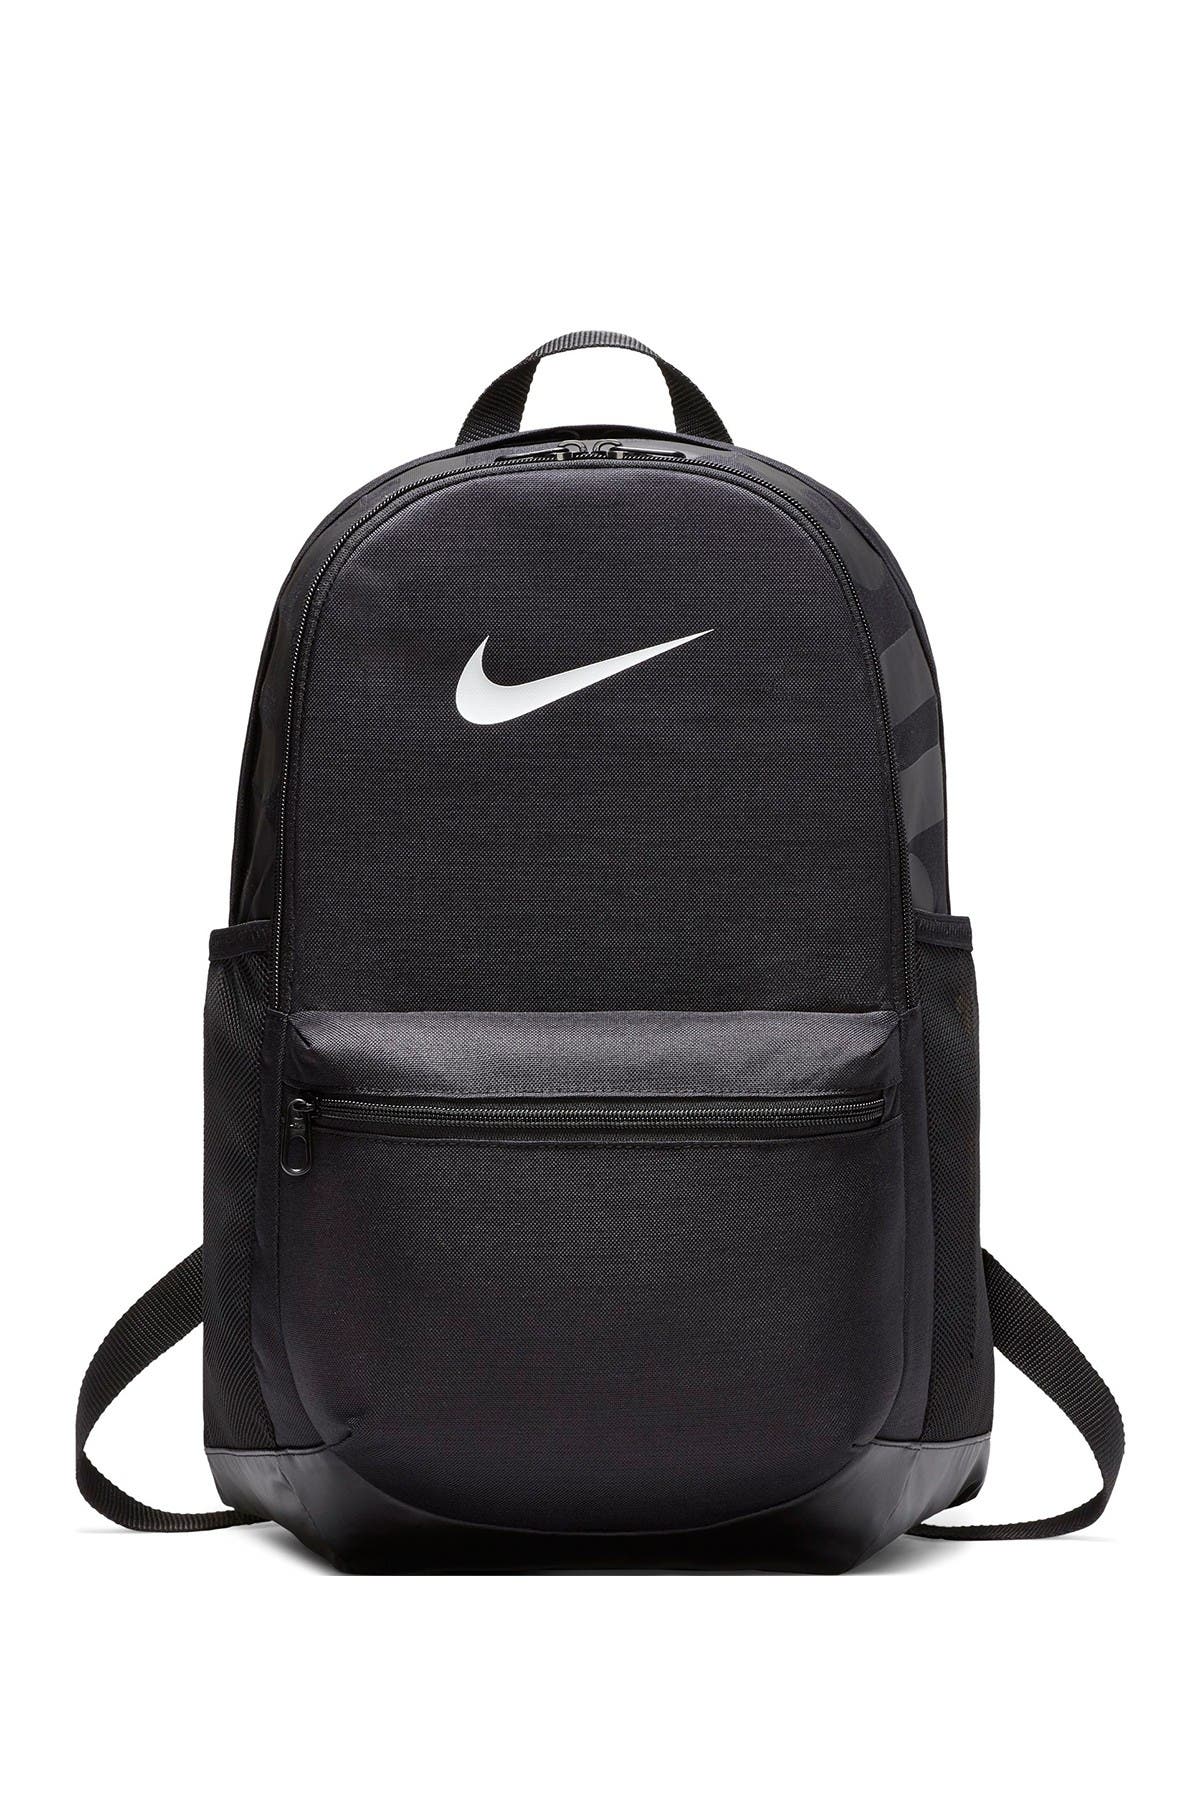 nike medium brasilia backpack